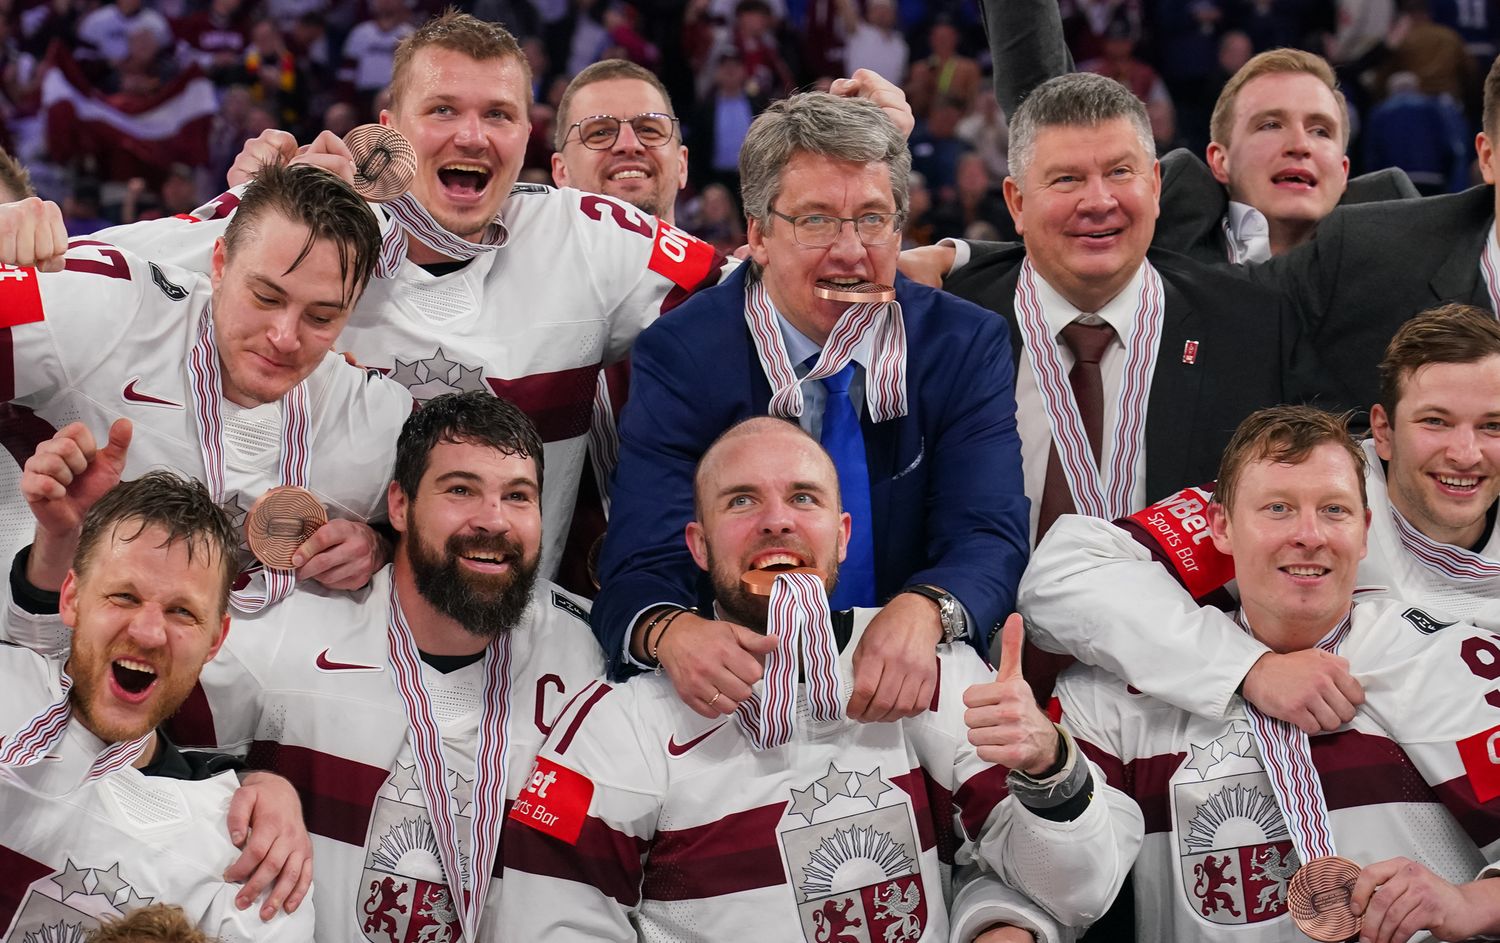 2023 IIHF Ice Hockey World Championship Finland - Latvia